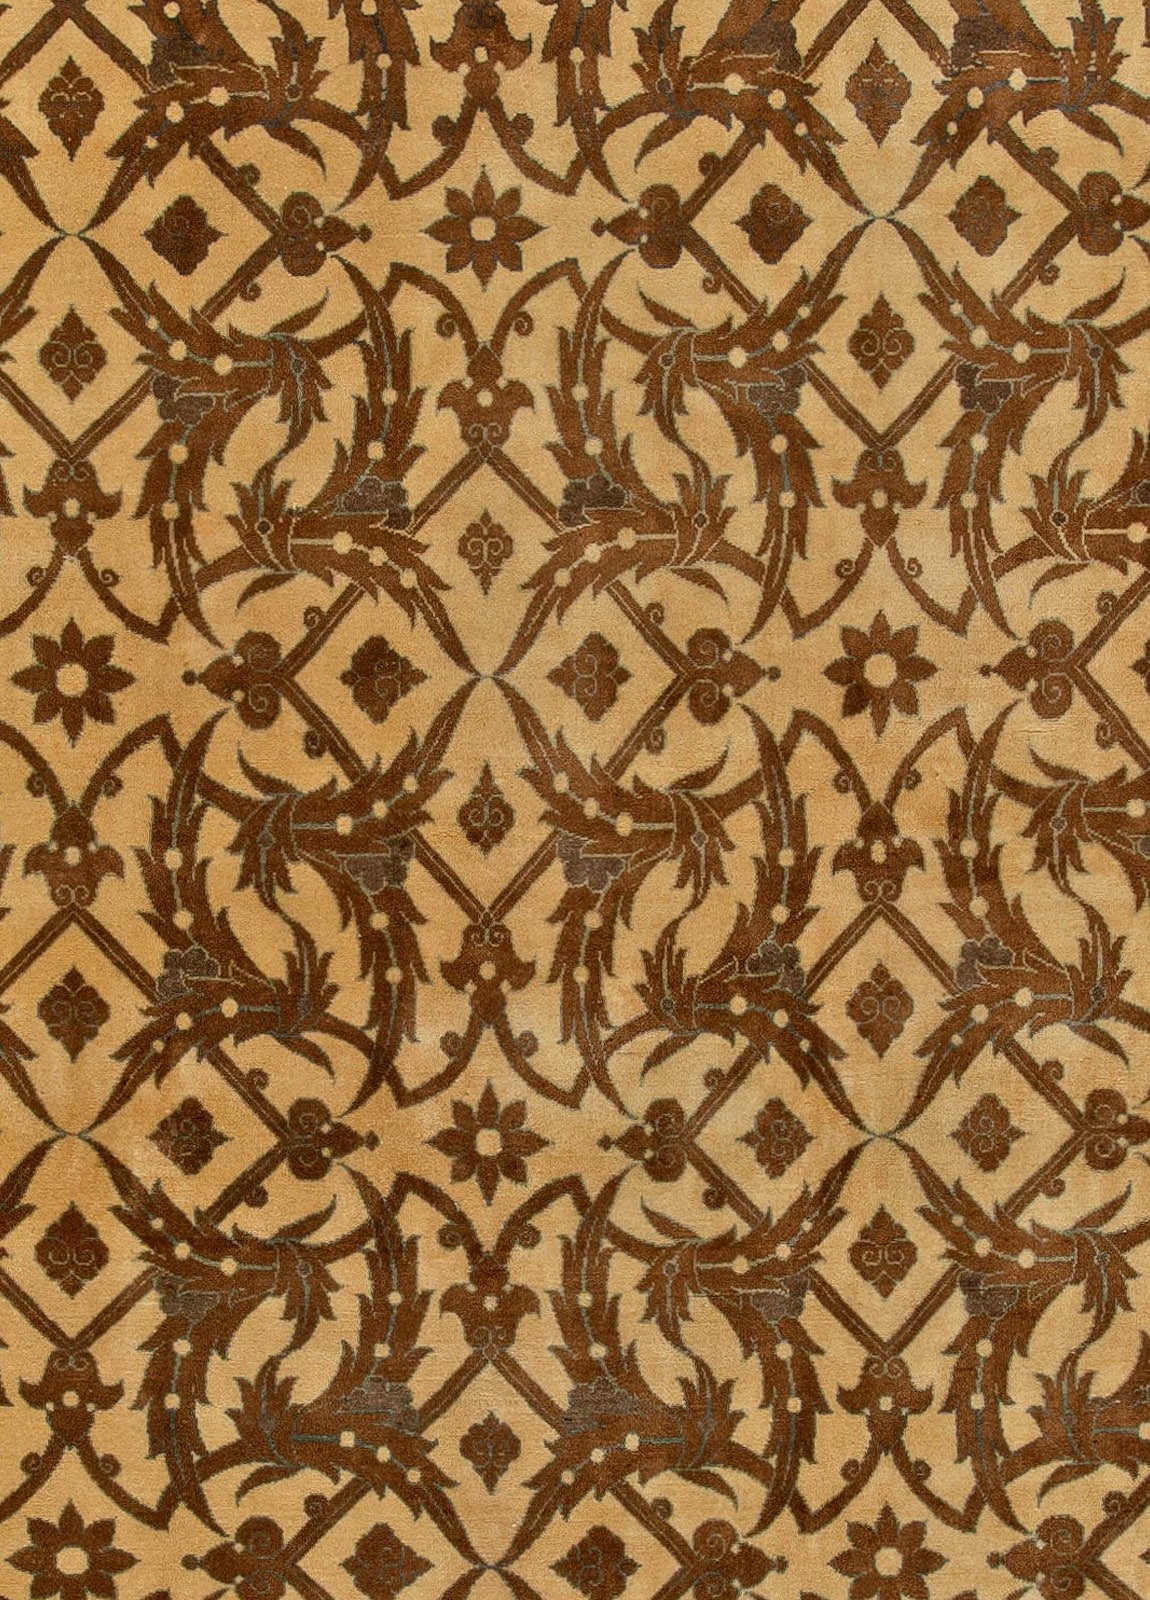 Tapis indien vintage Brown
Taille : 548 × 627 cm (18'0